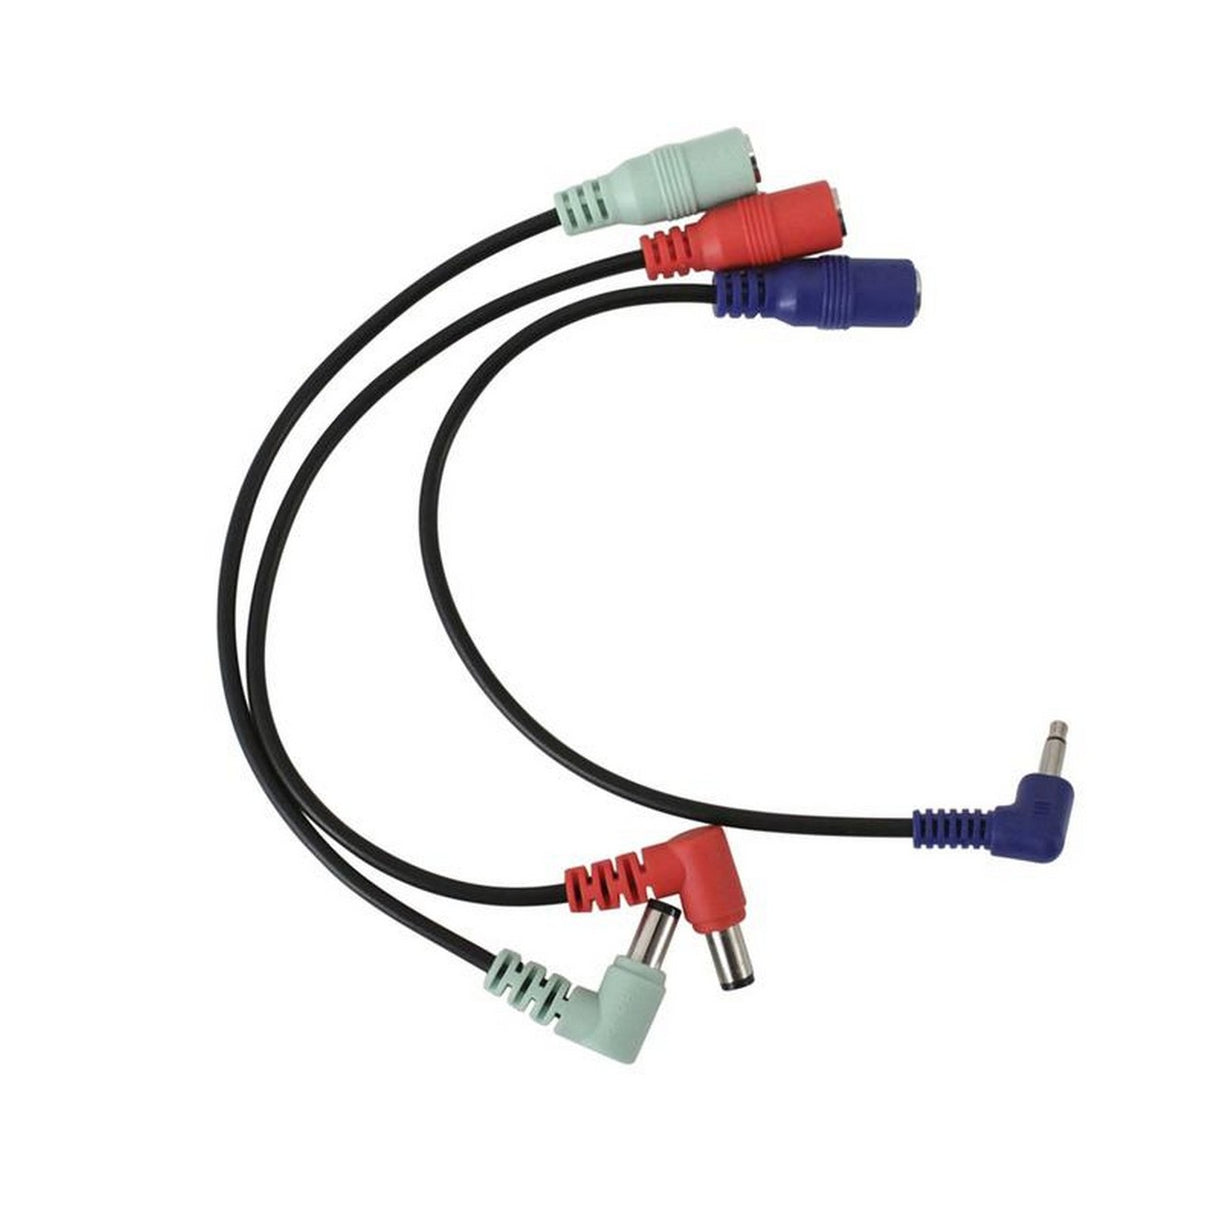 Big Joe PS-204 | Connector Adapter Cable Set